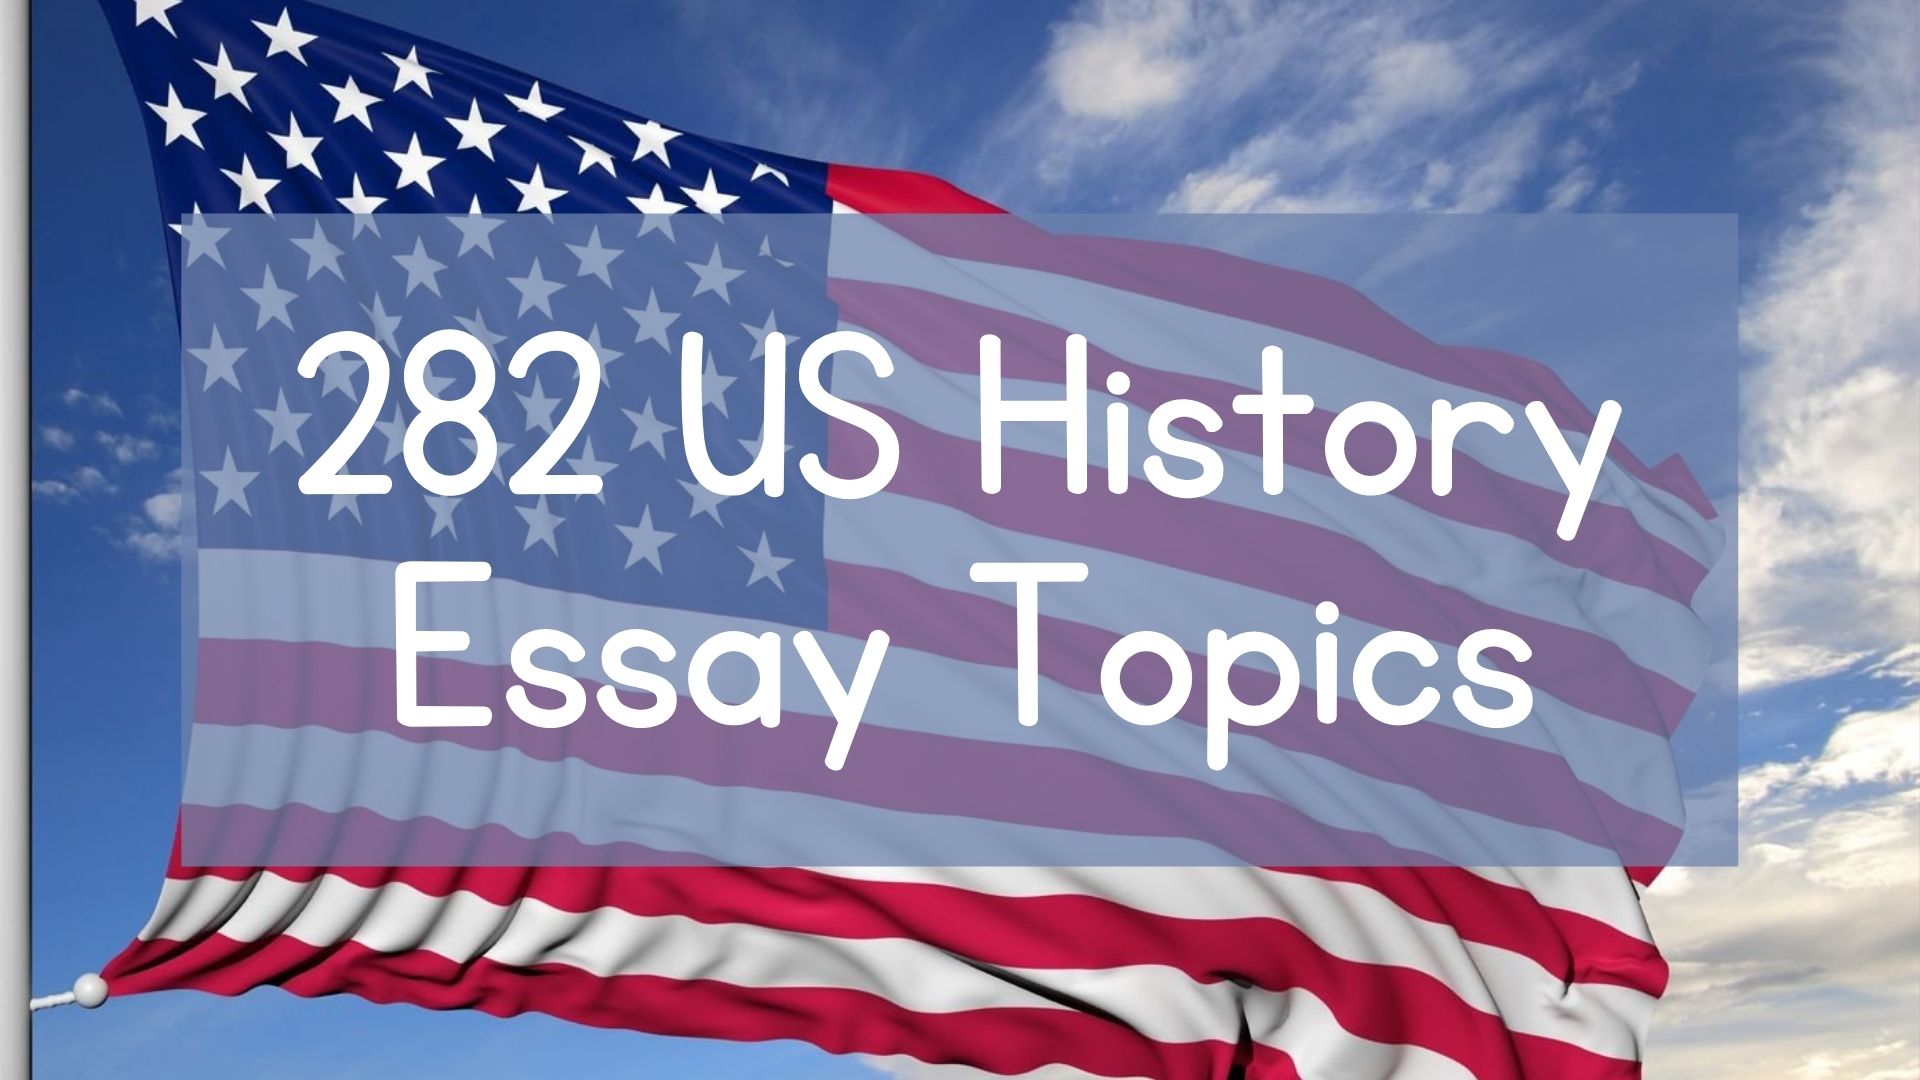 282 US History Essay Topics